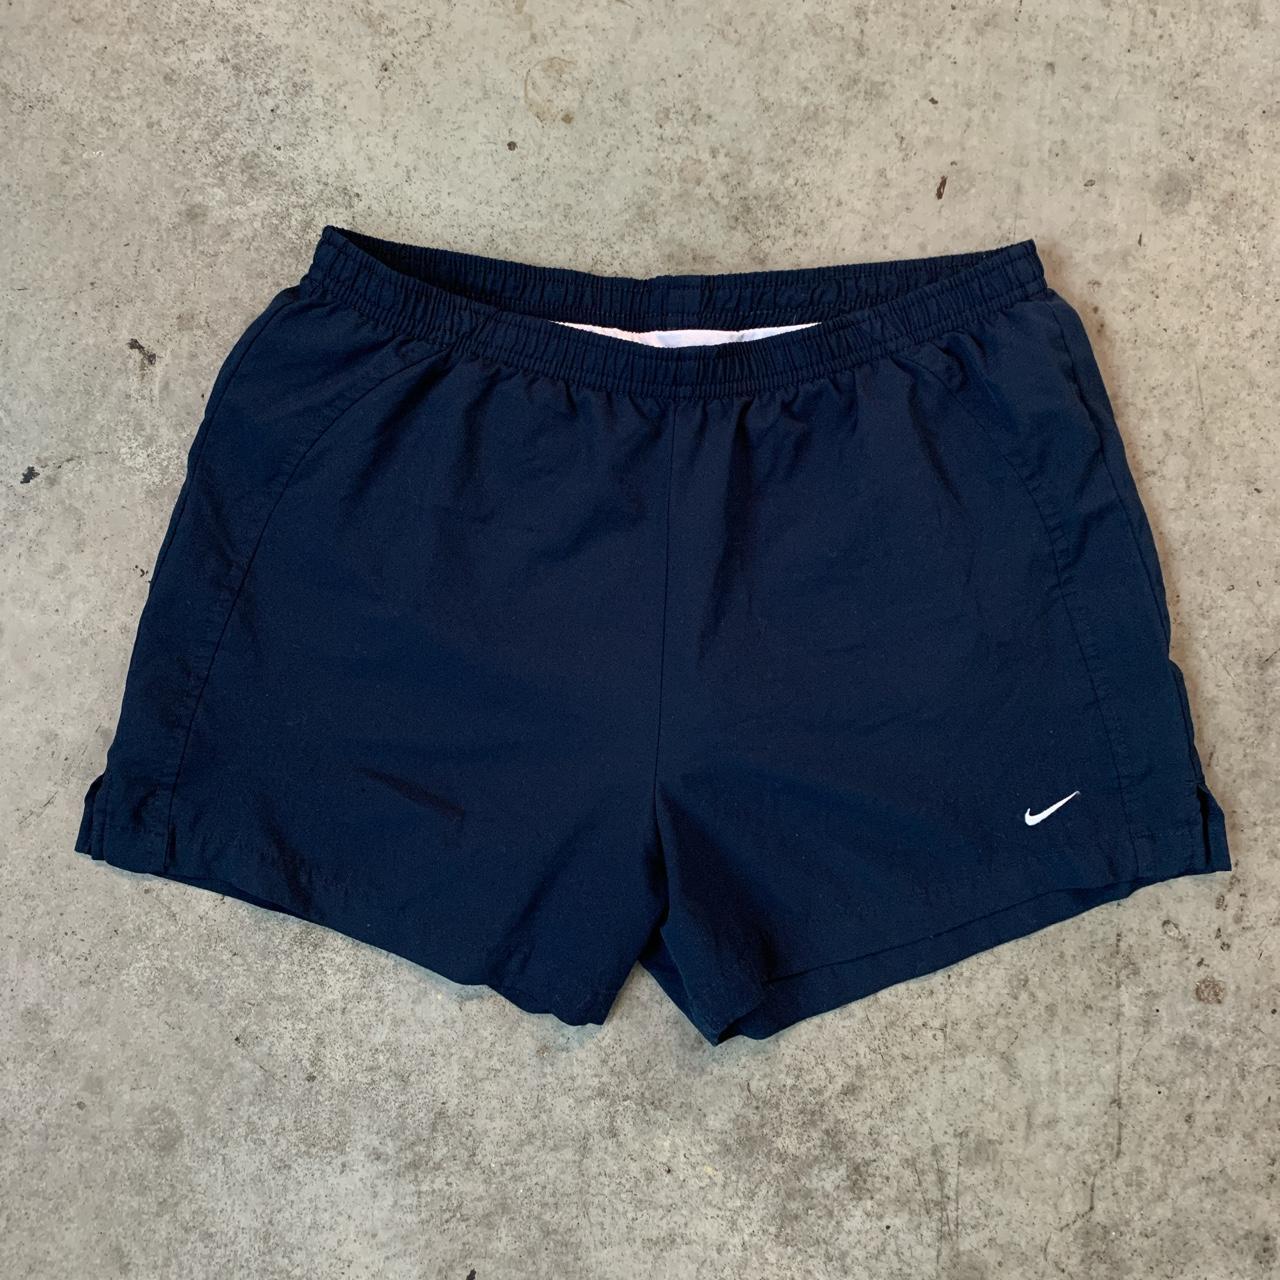 Nike Women's Navy Shorts | Depop